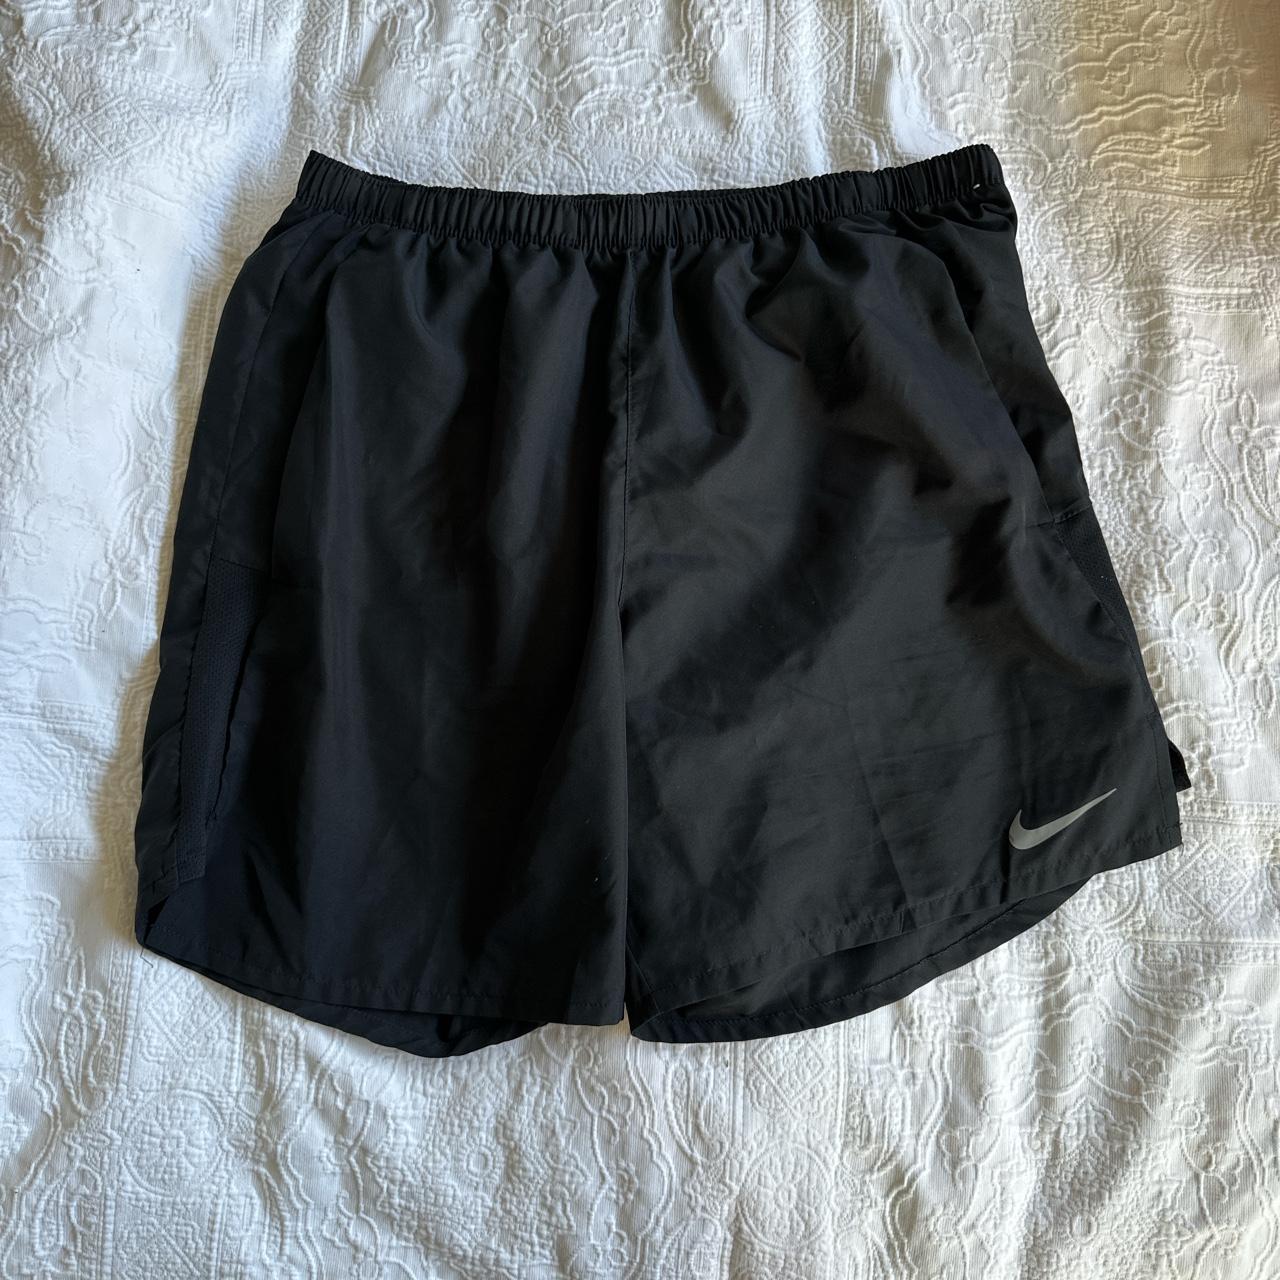 NIKE dry fit shorts - Depop